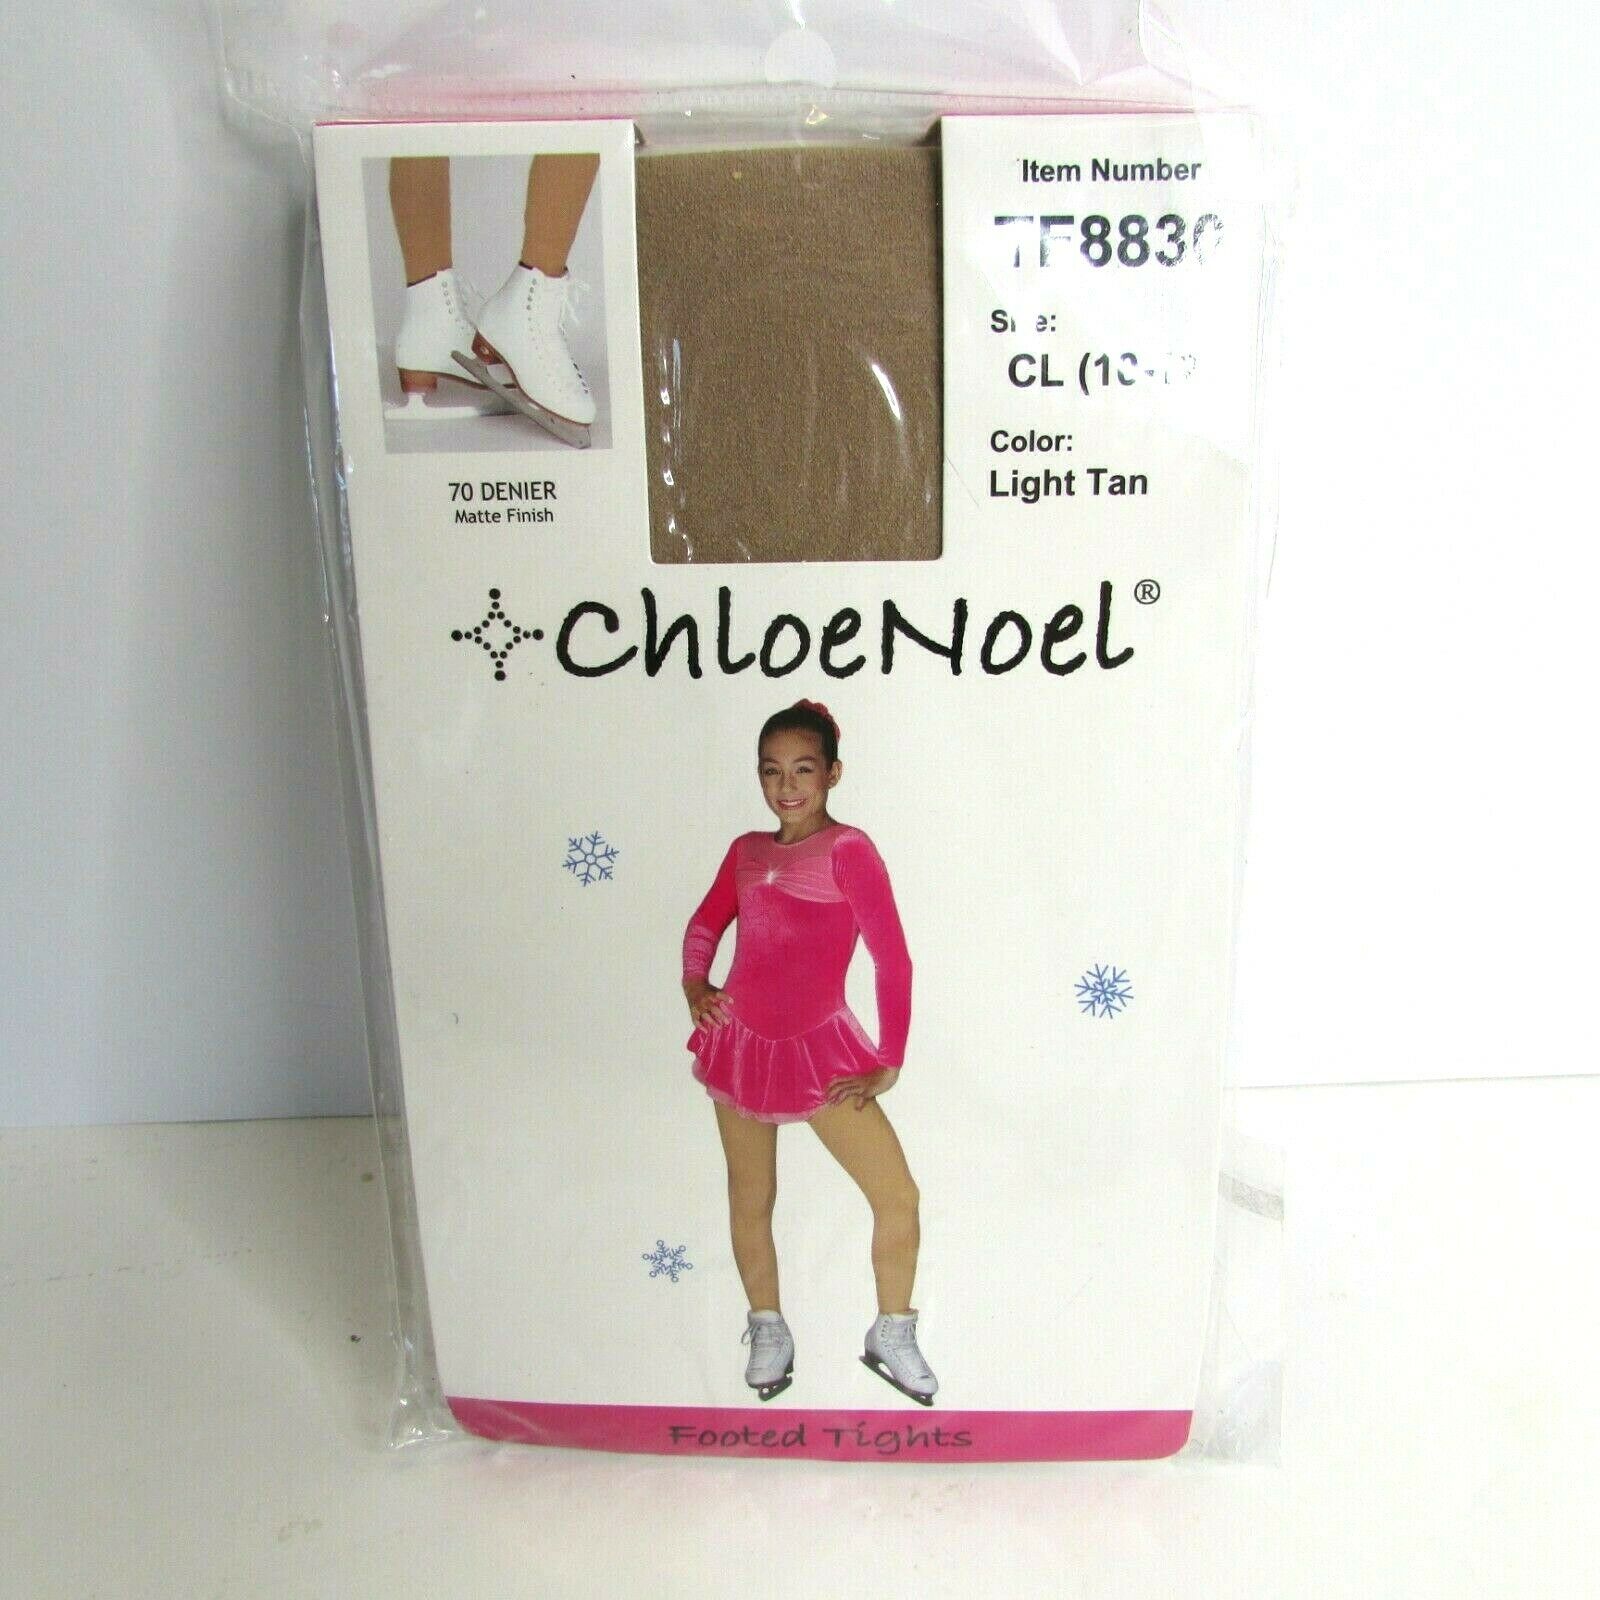 New Chloe Noel Footed Tights Ice Skating Tan Tf8830 Size Cl 10-12 Medium Weight